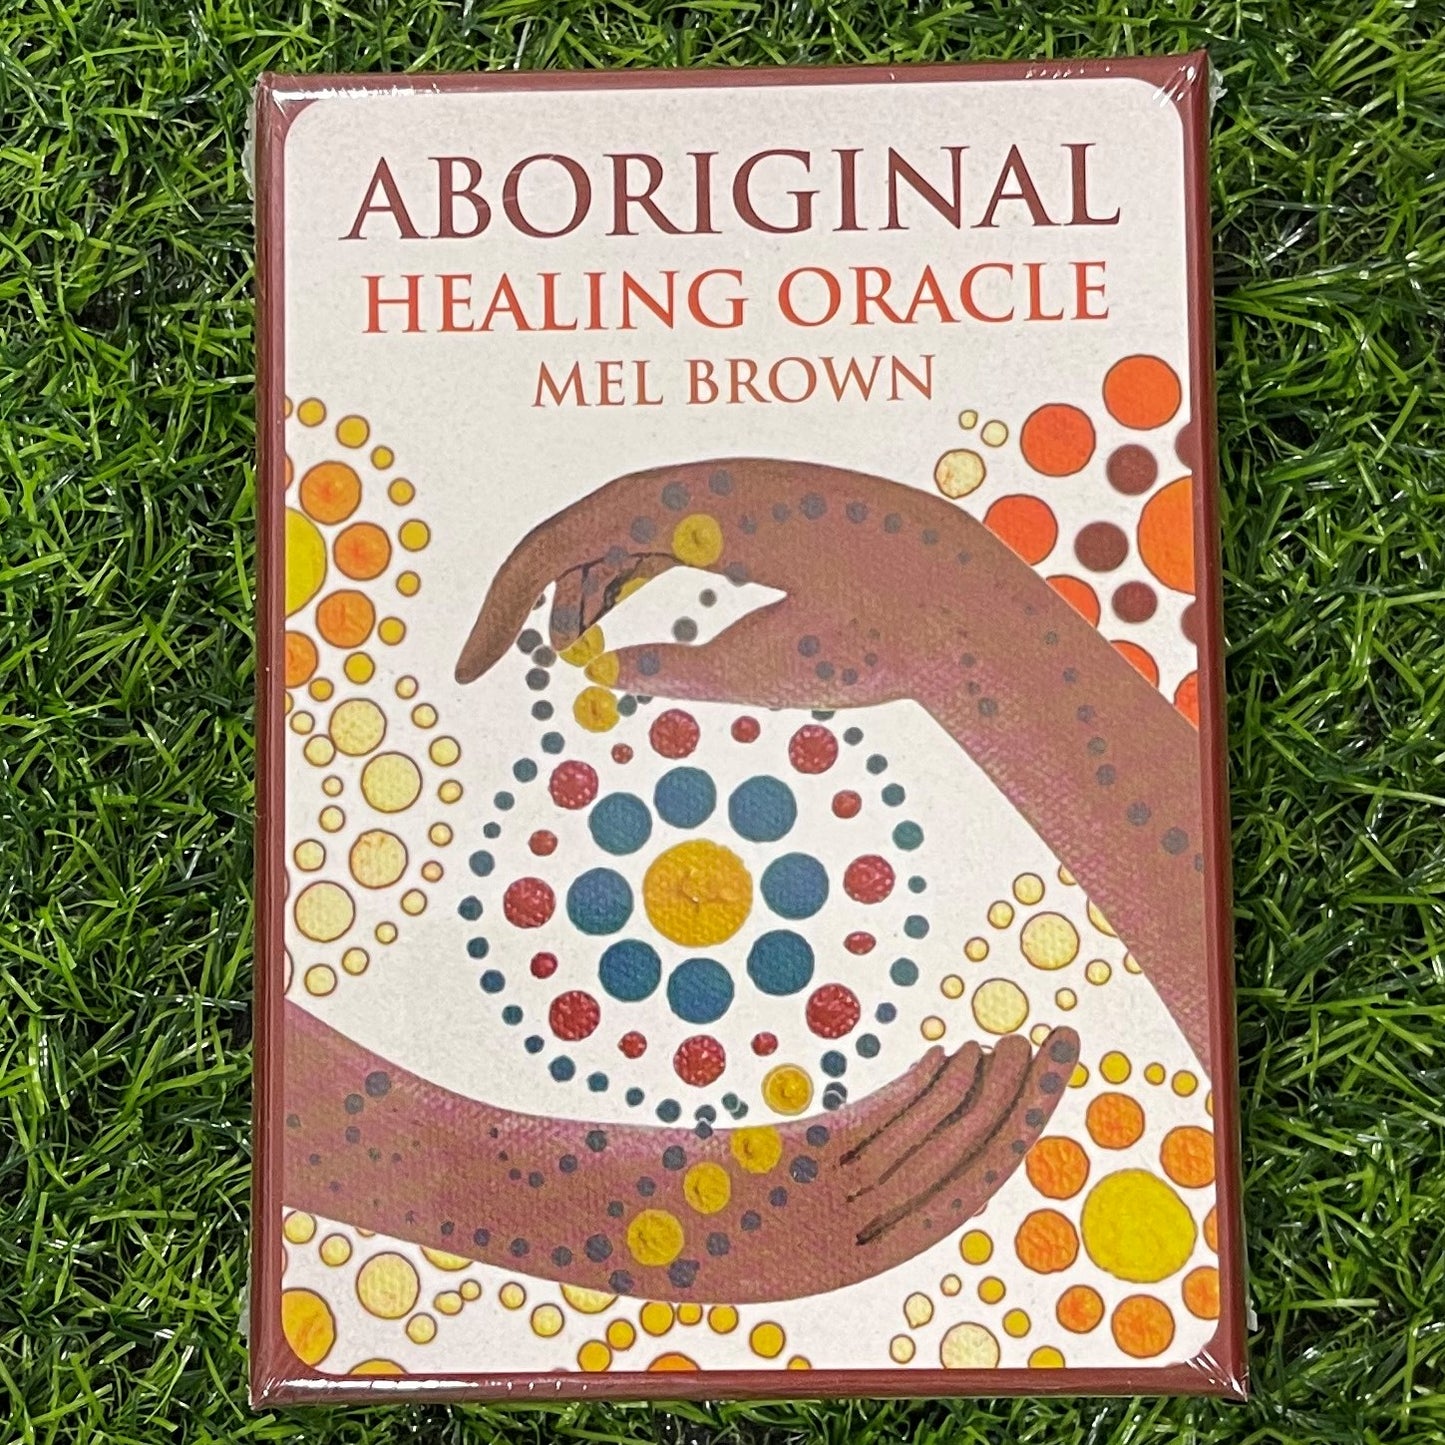 Aboriginal Healing